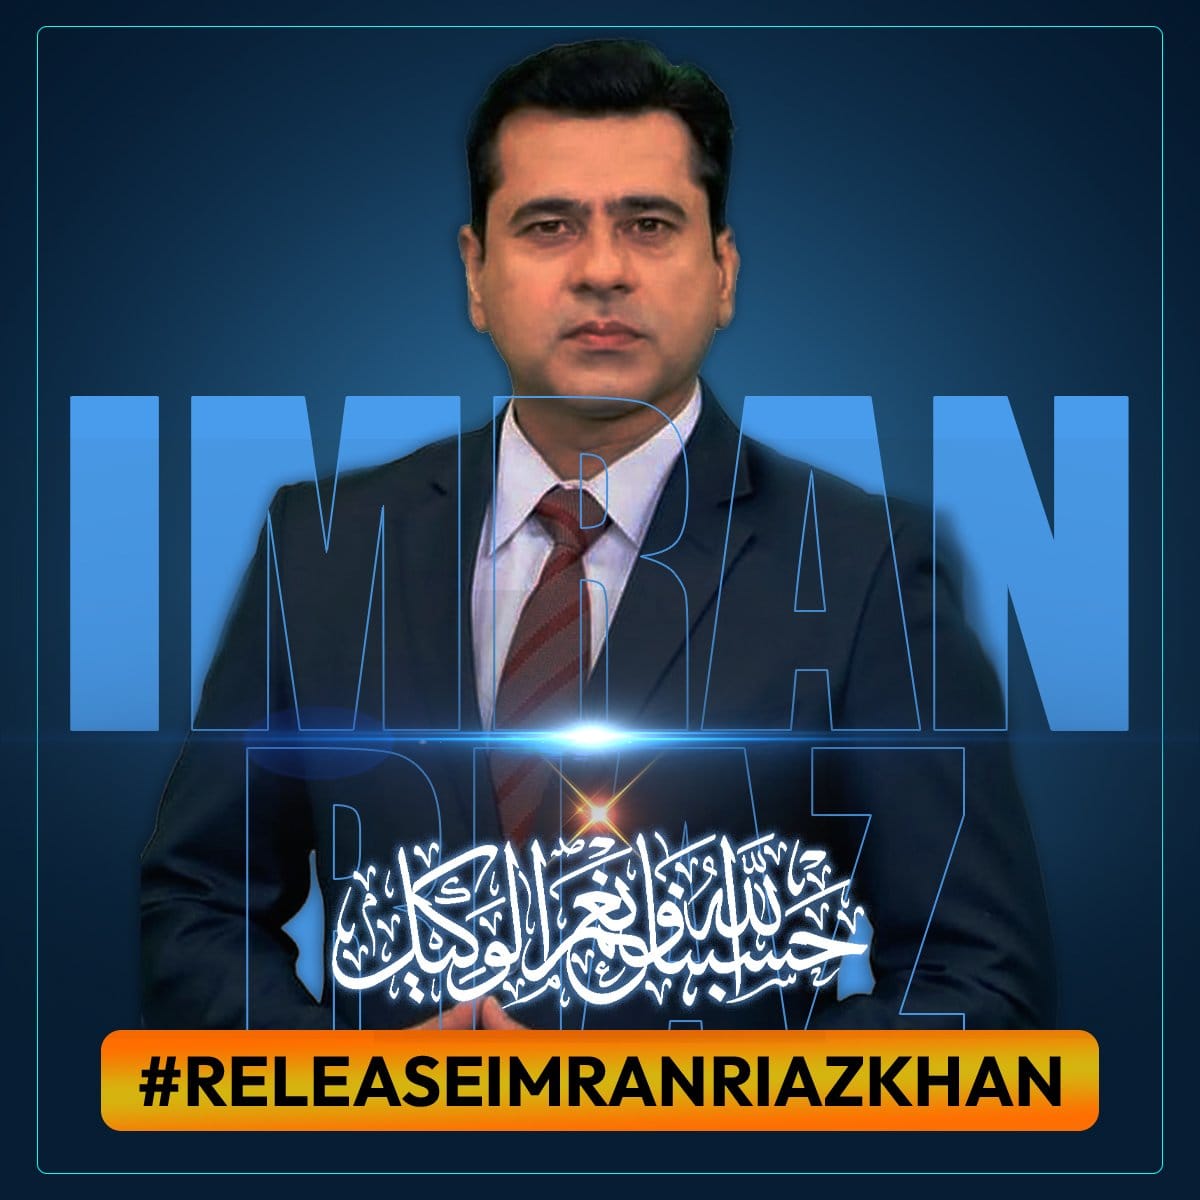 #ReleaseImranRiazKhan